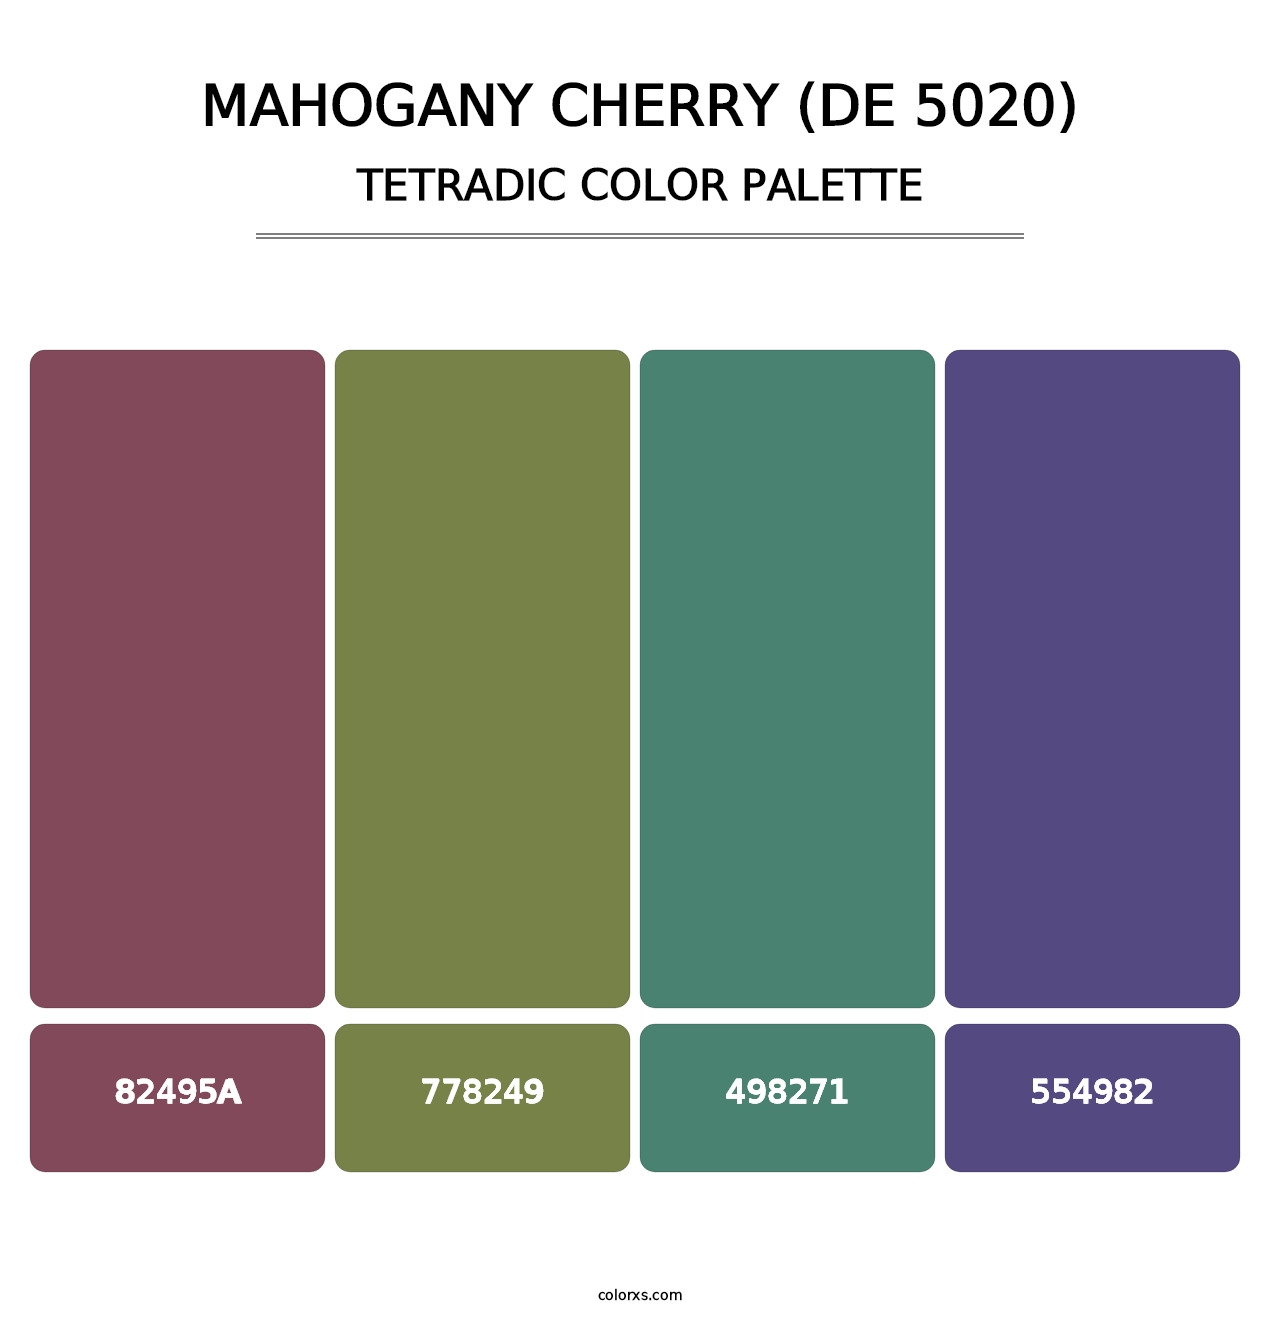 Mahogany Cherry (DE 5020) - Tetradic Color Palette